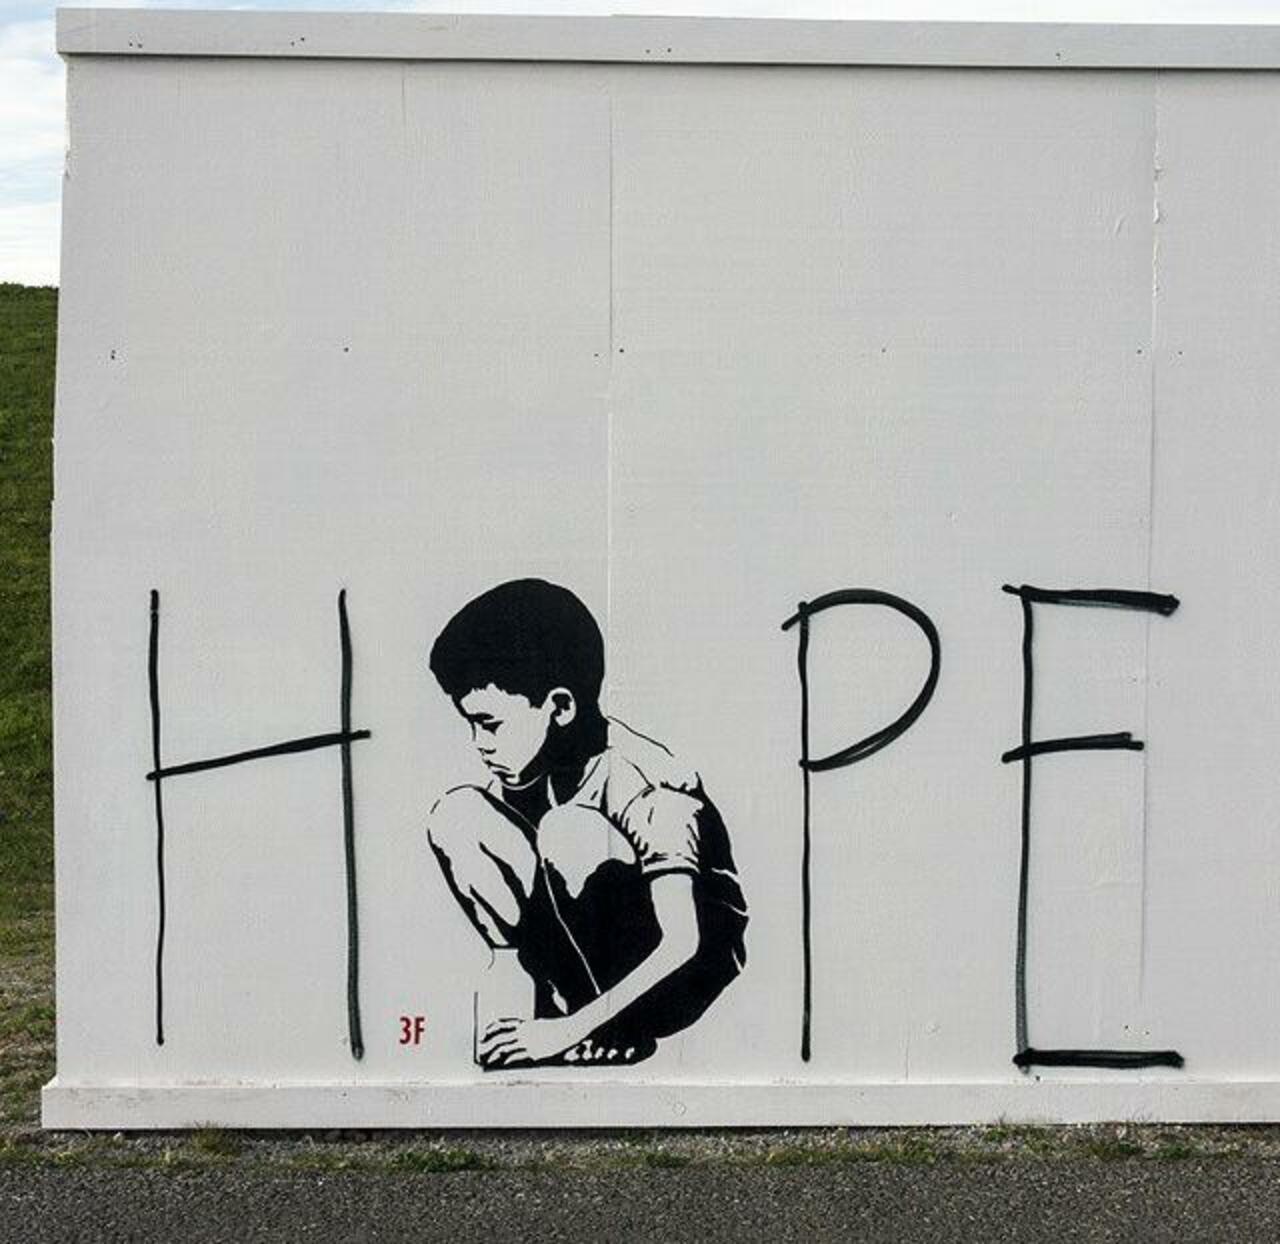 'Hope'
New Street Art by 3Fountains 

#arte #art #graffiti #streetart http://t.co/glmfJ7xbtP